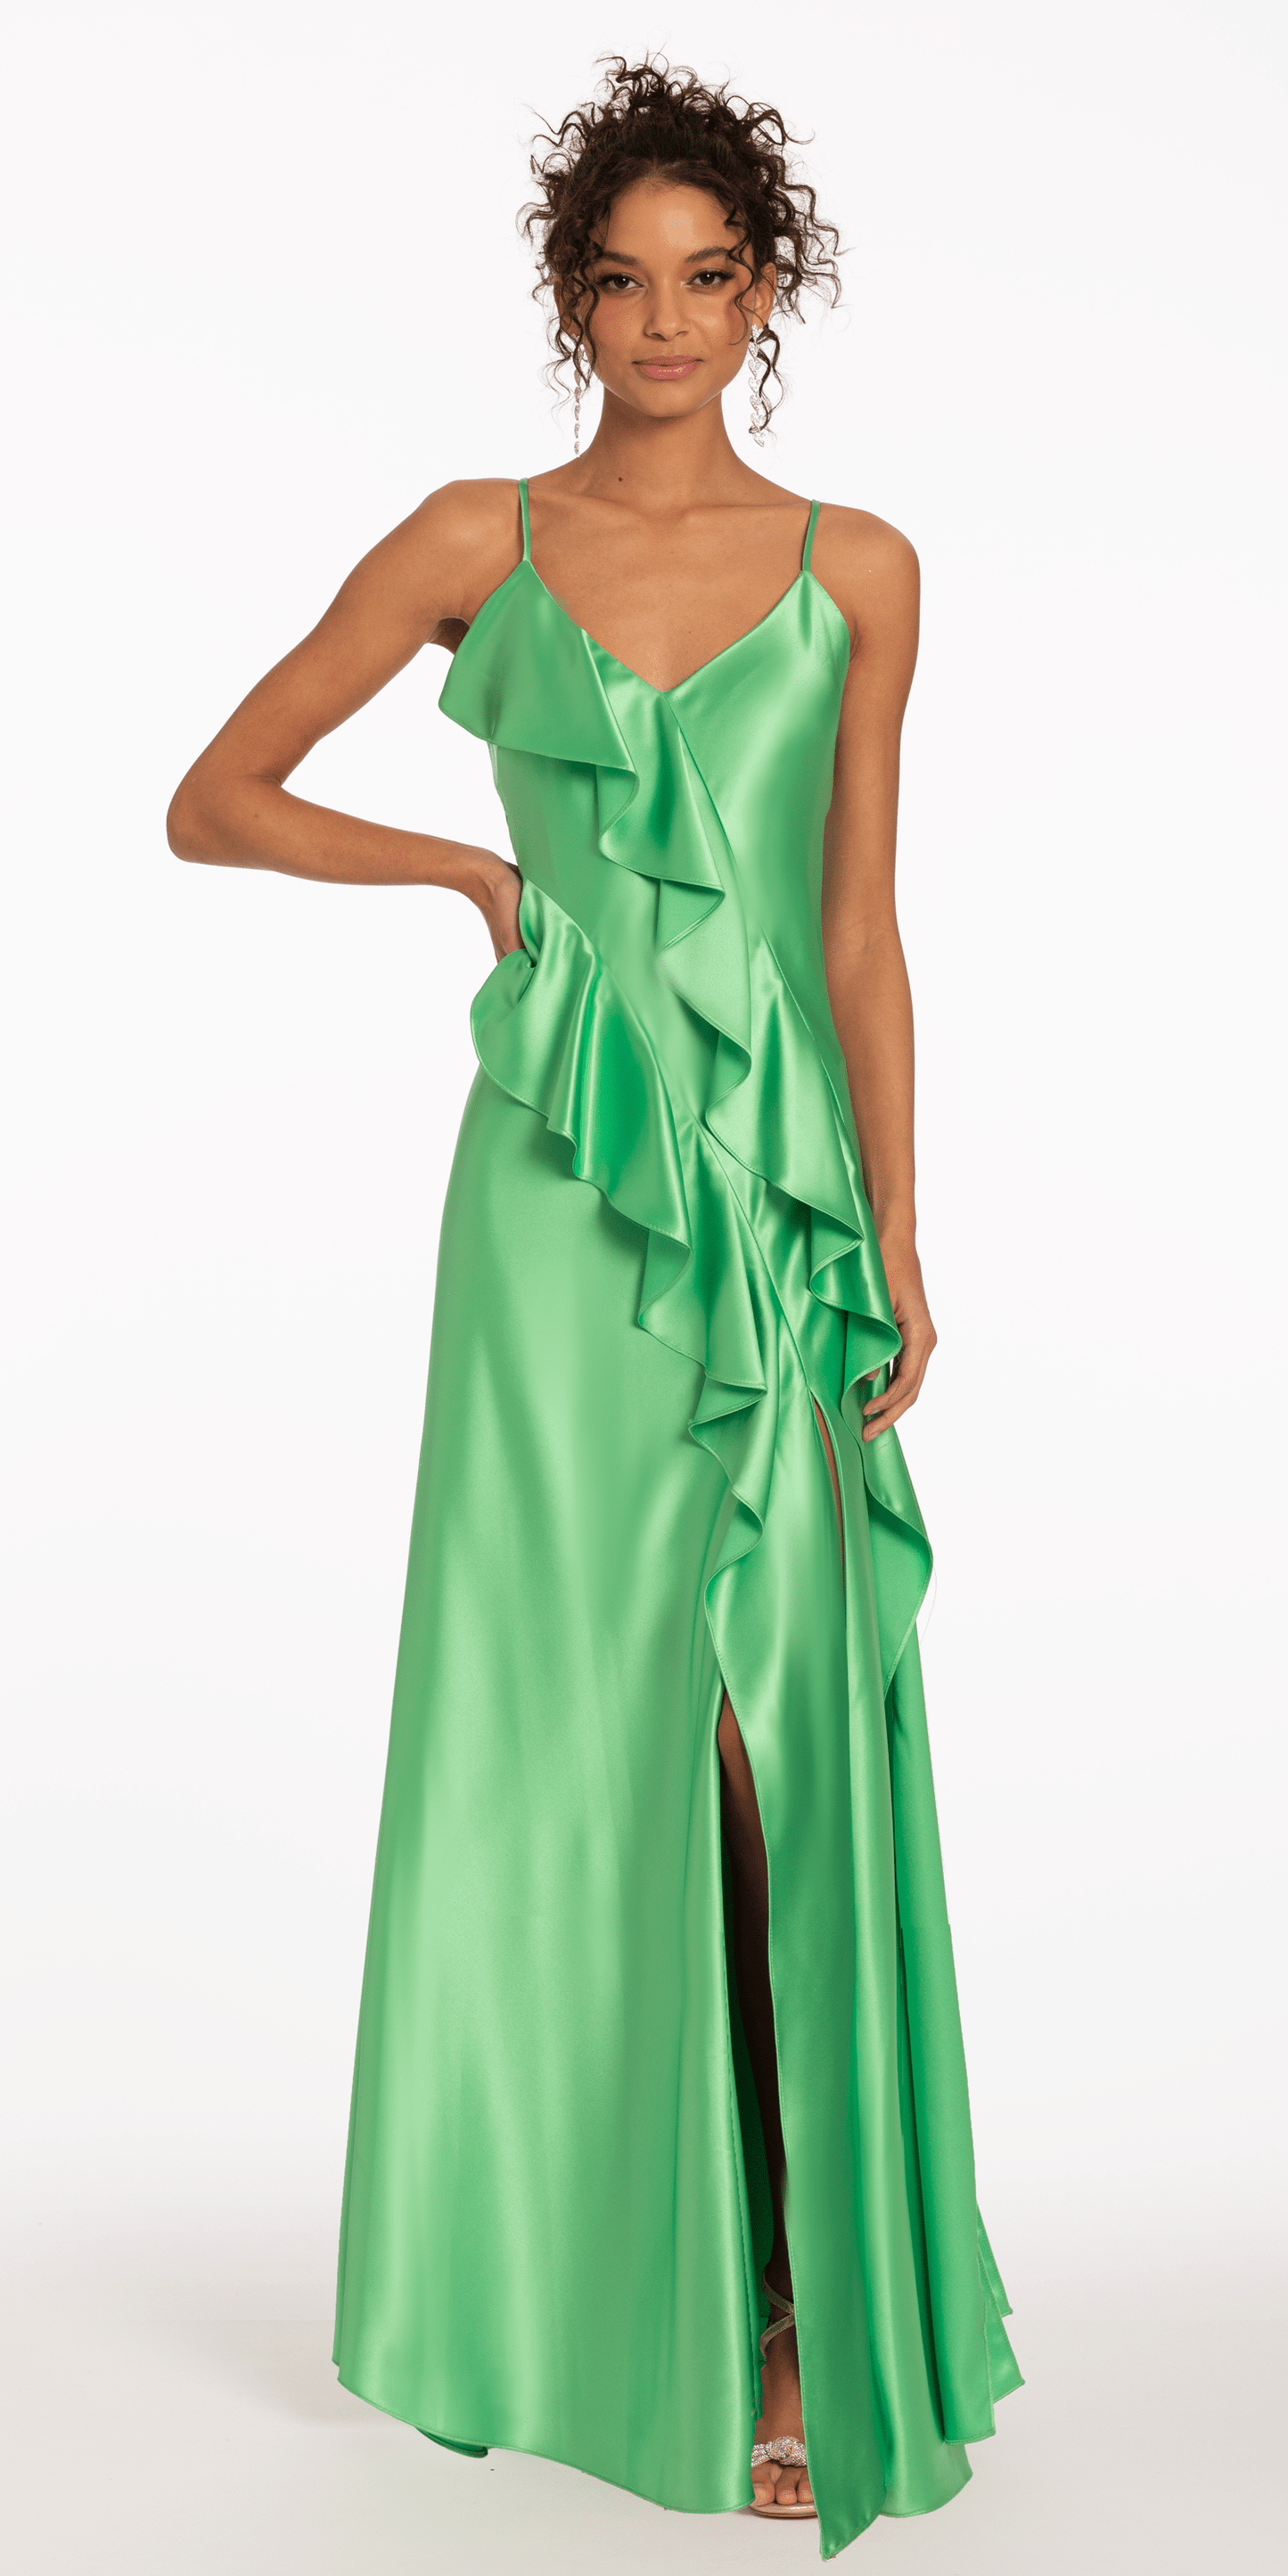 Camille La Vie Satin Ruffle Front Slip Dress with Side Slit missy / 0 / green